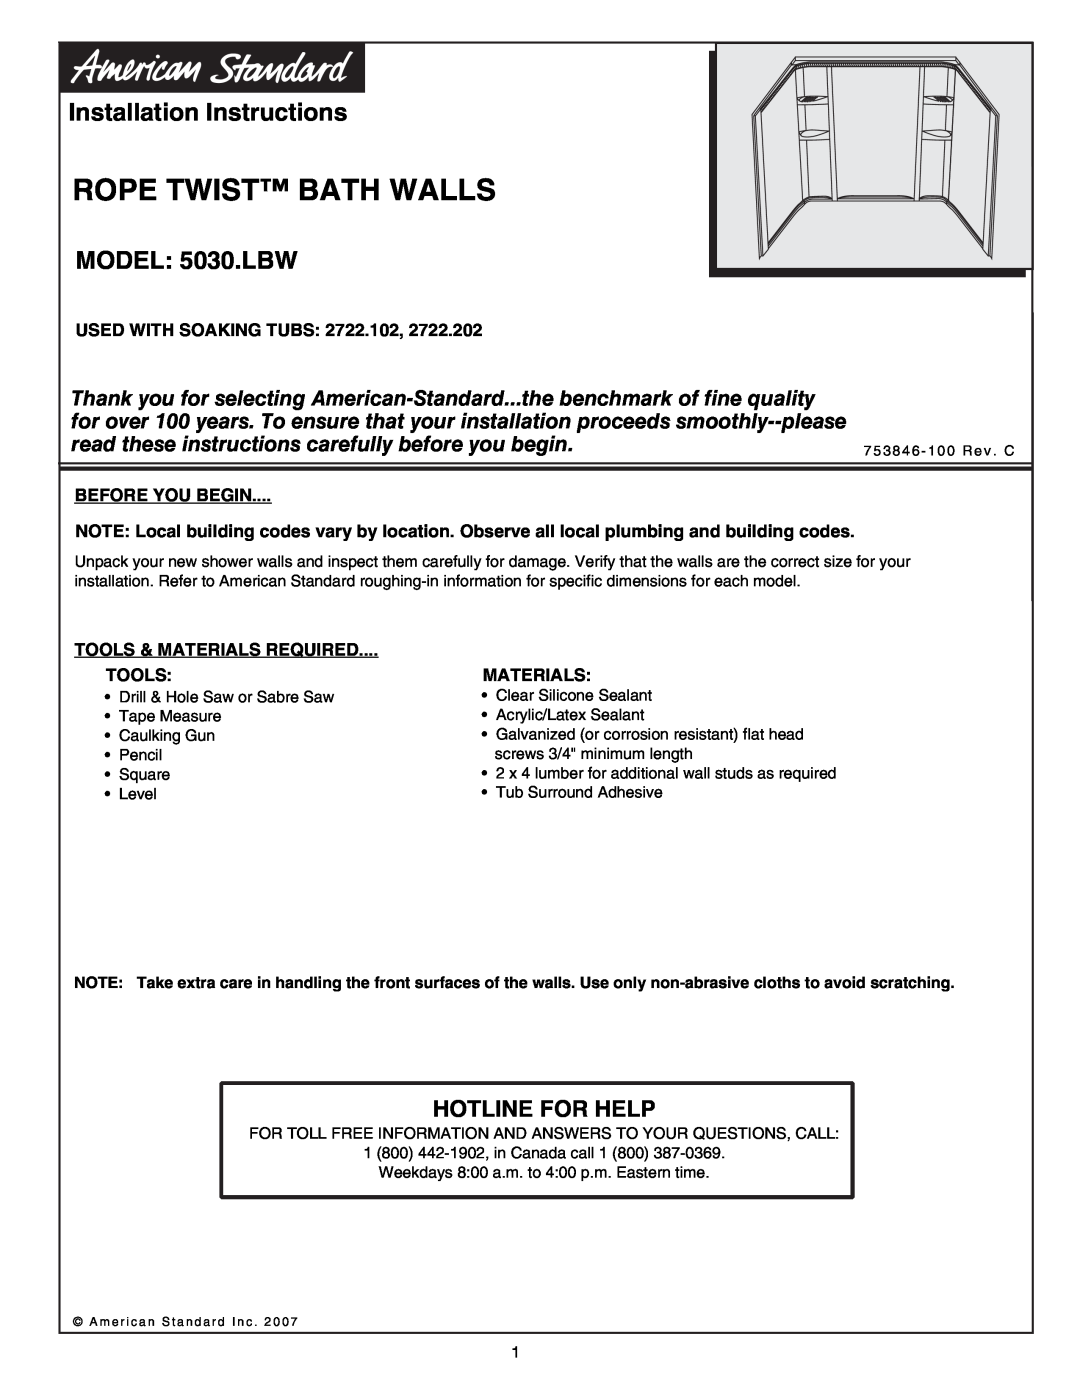 American Standard installation instructions Rope Twist Bath Walls, Installation Instructions, MODEL 5030.LBW 